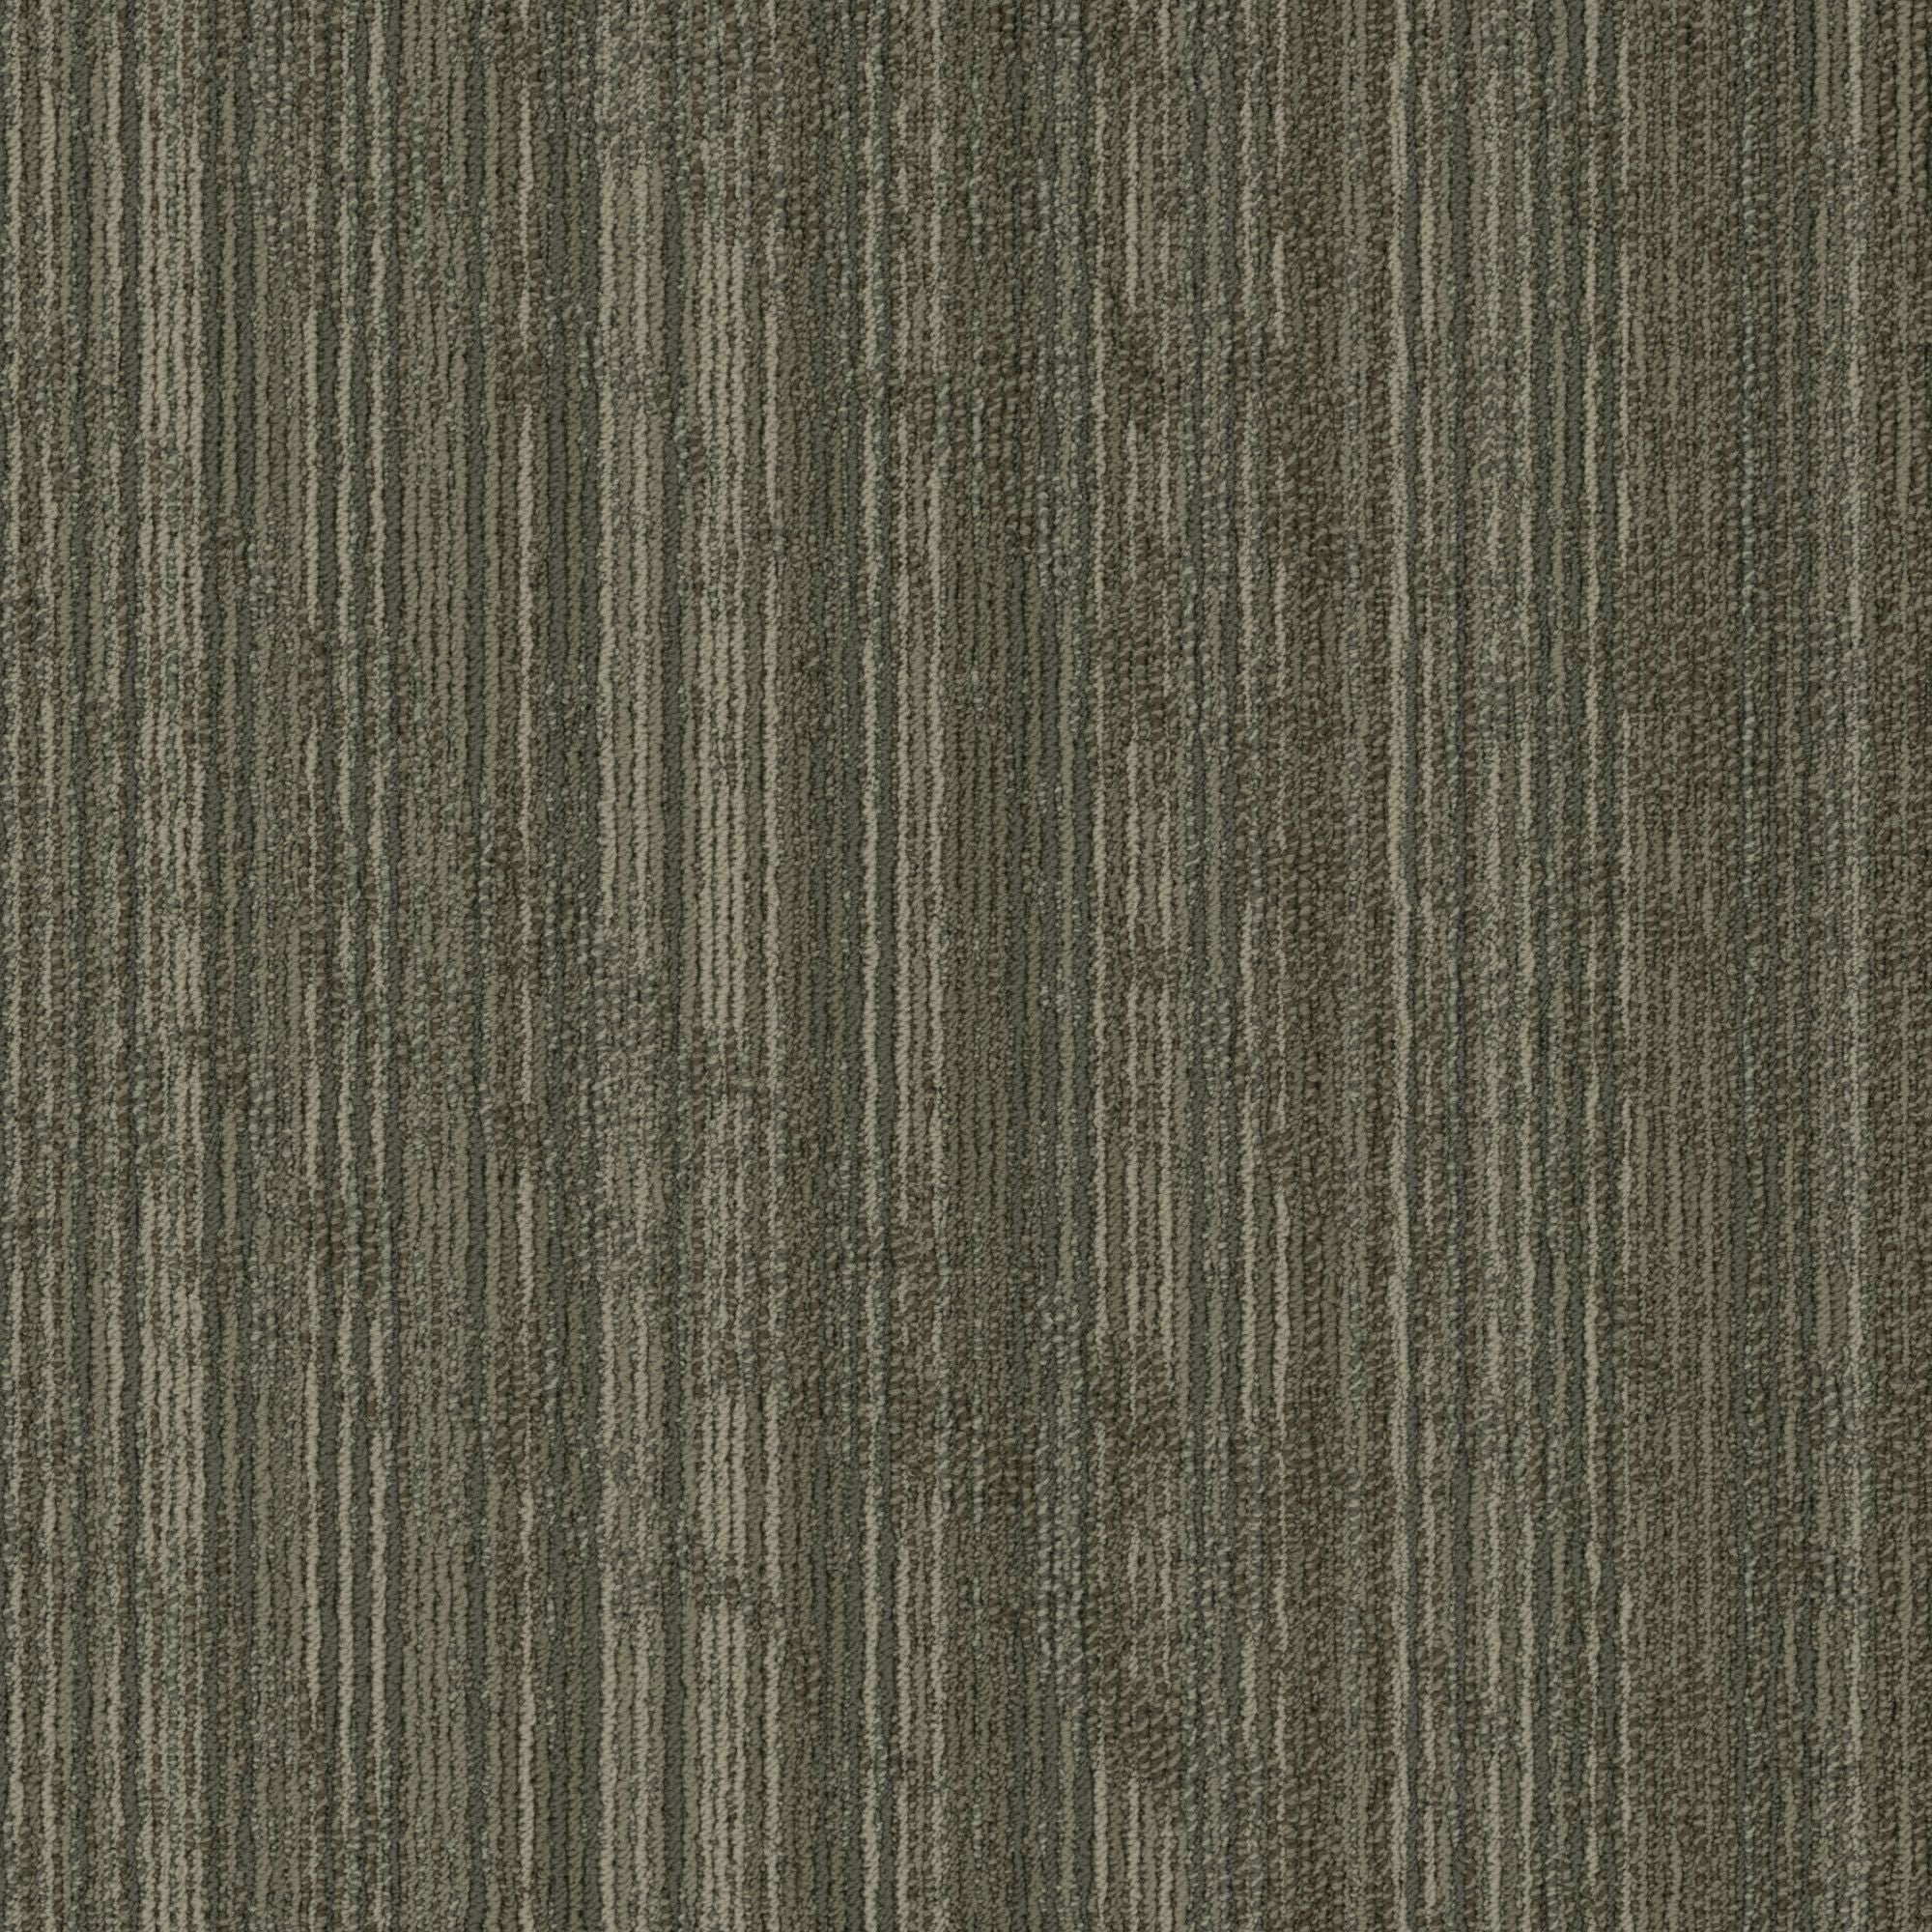 Shaw carpet tile Sort 54919 00210 Twist